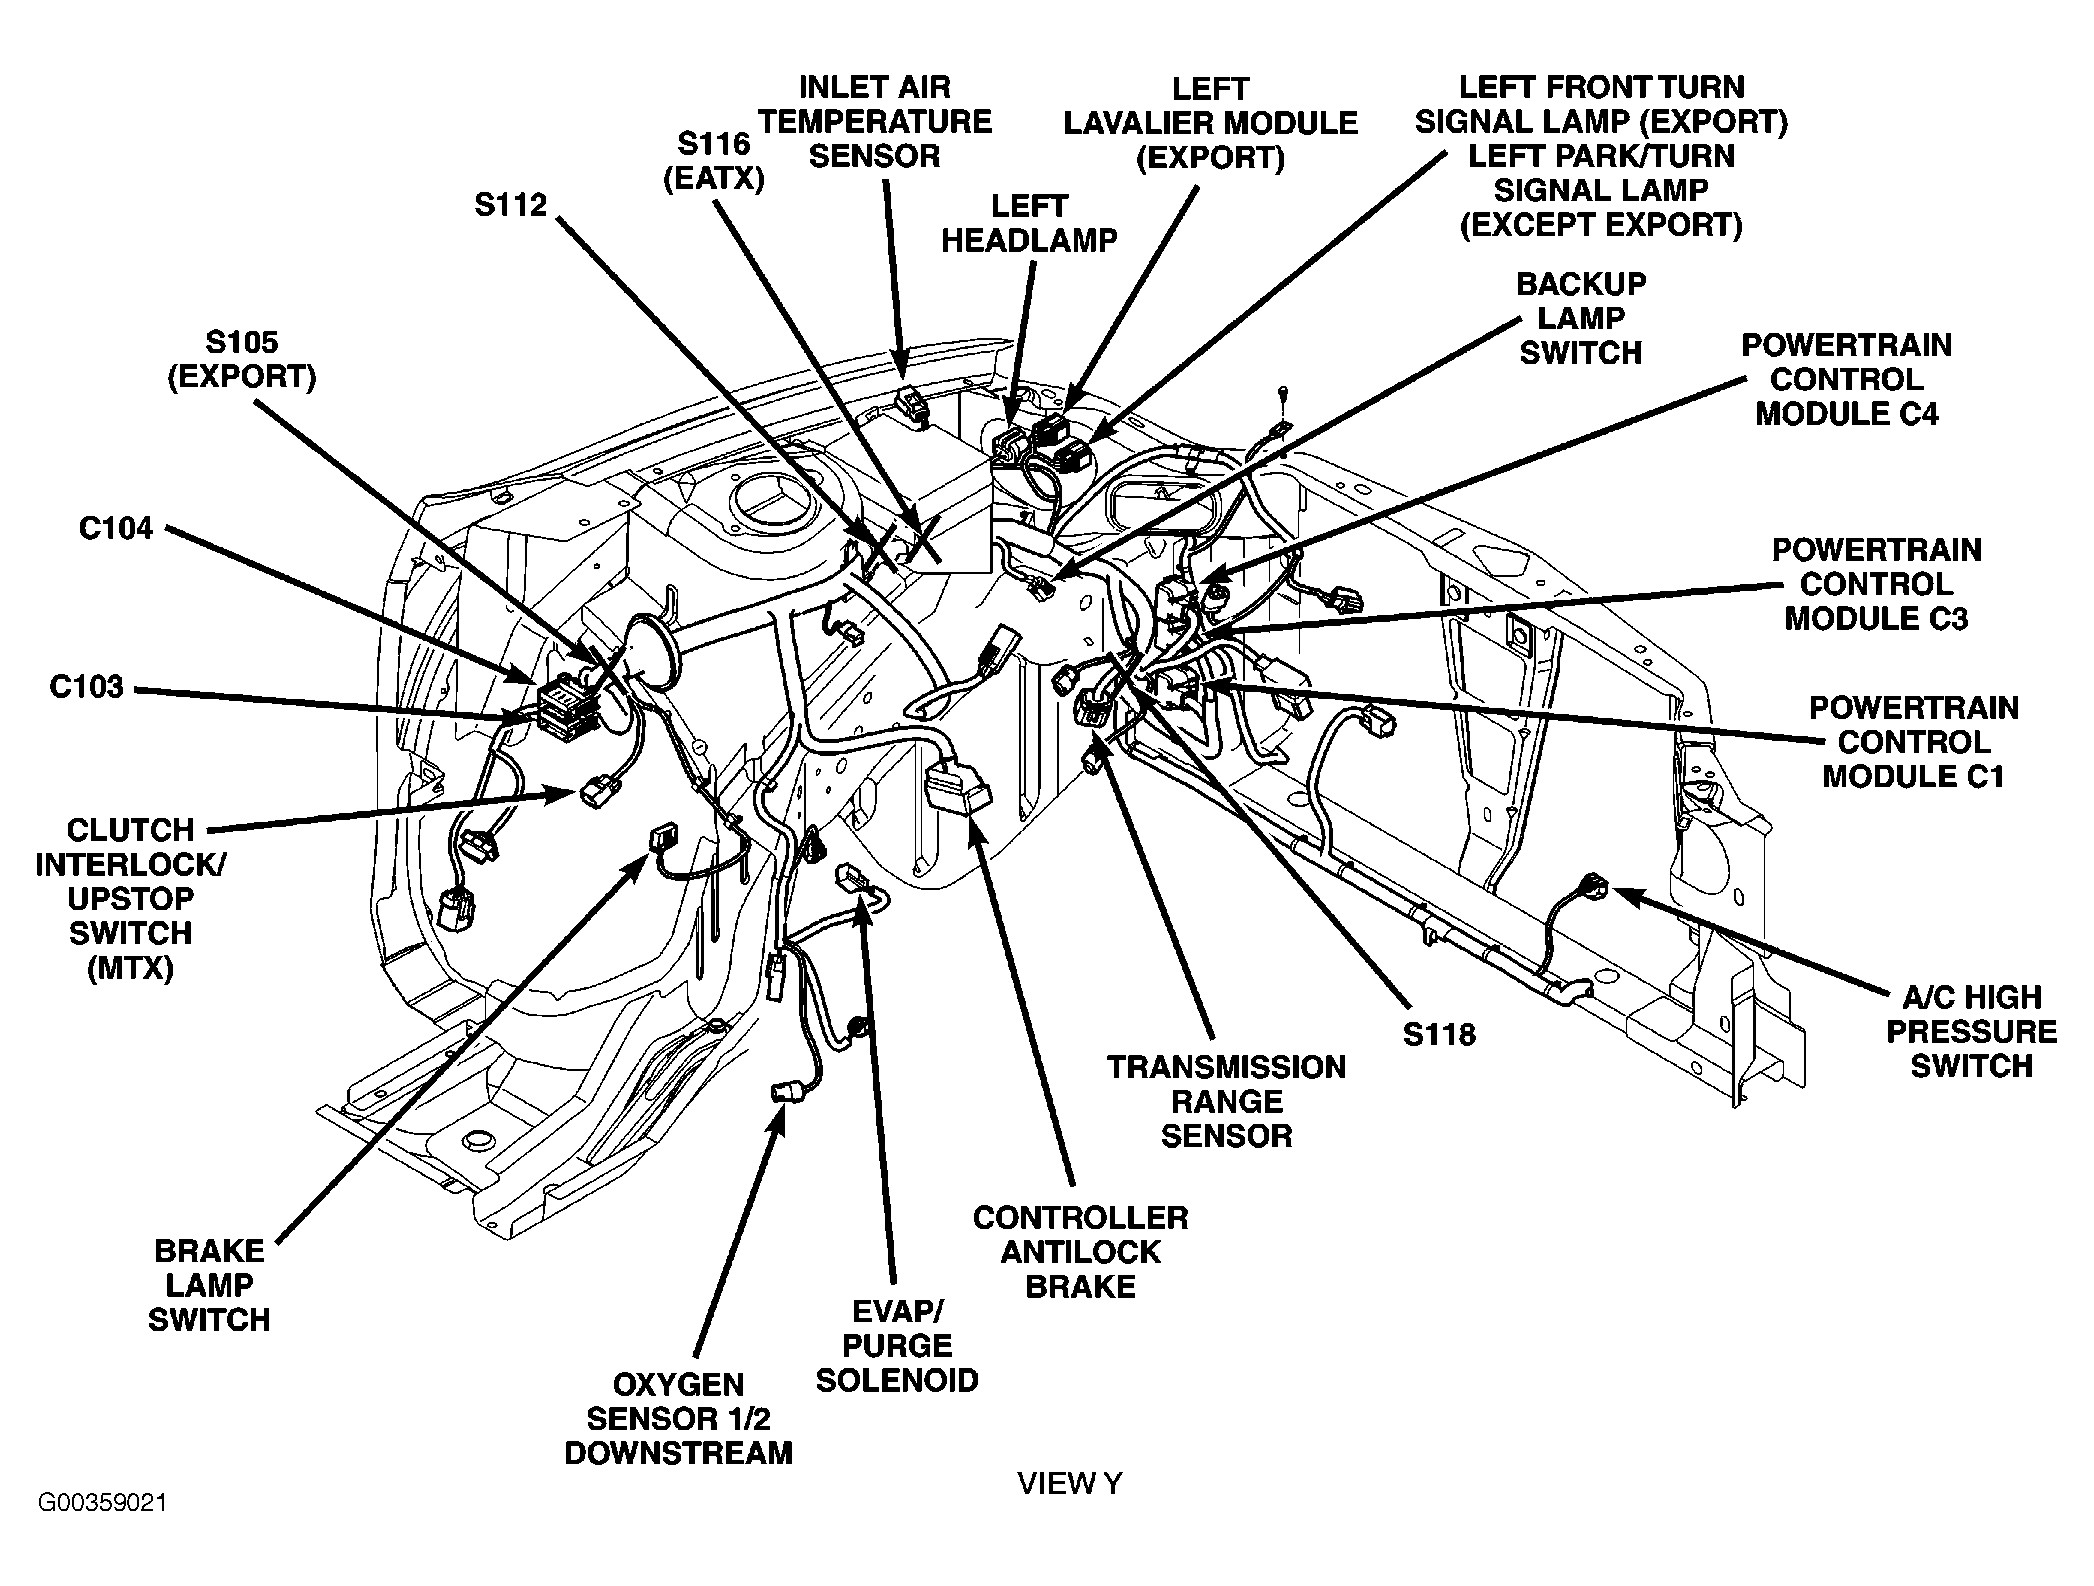 1998 Dodge Neon Engine Diagram Diagram] 95 Neon Engine Diagram Full Version Hd Quality Of 1998 Dodge Neon Engine Diagram